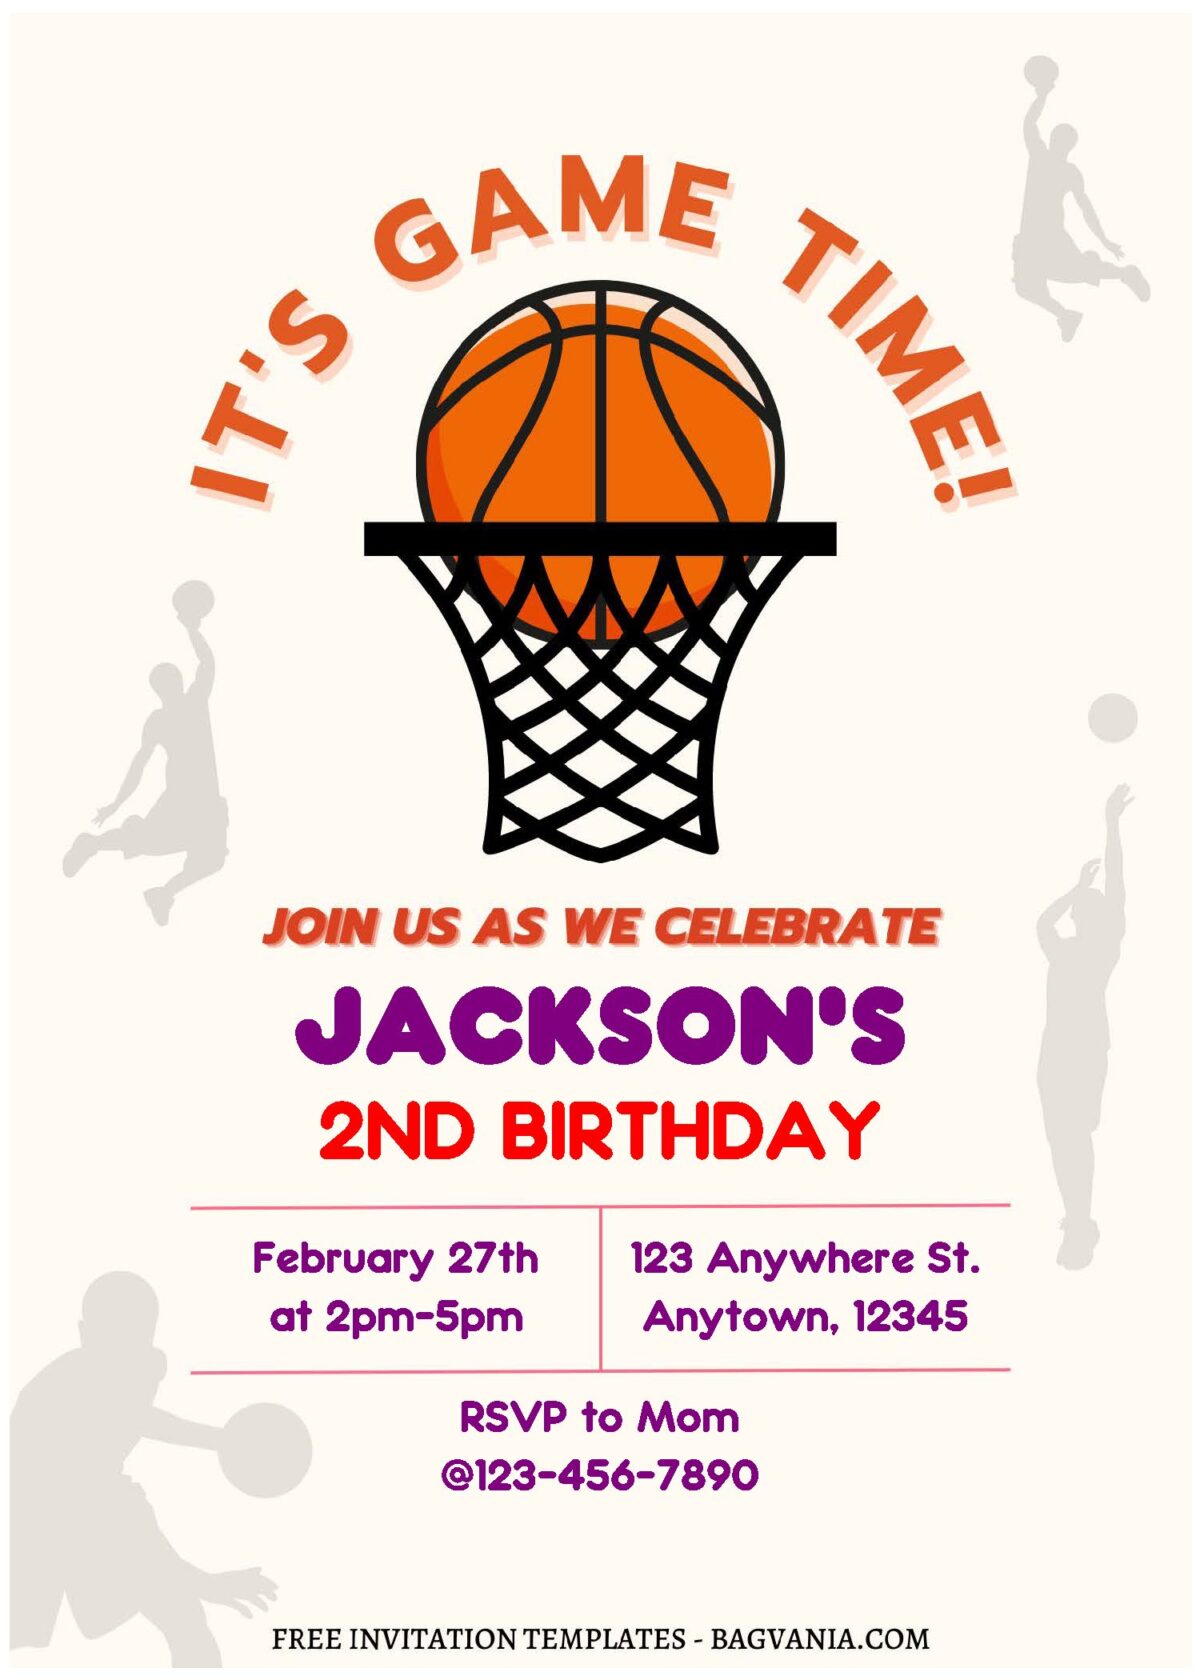 (Free Editable PDF) Game Time Basketball Birthday Invitation Templates A